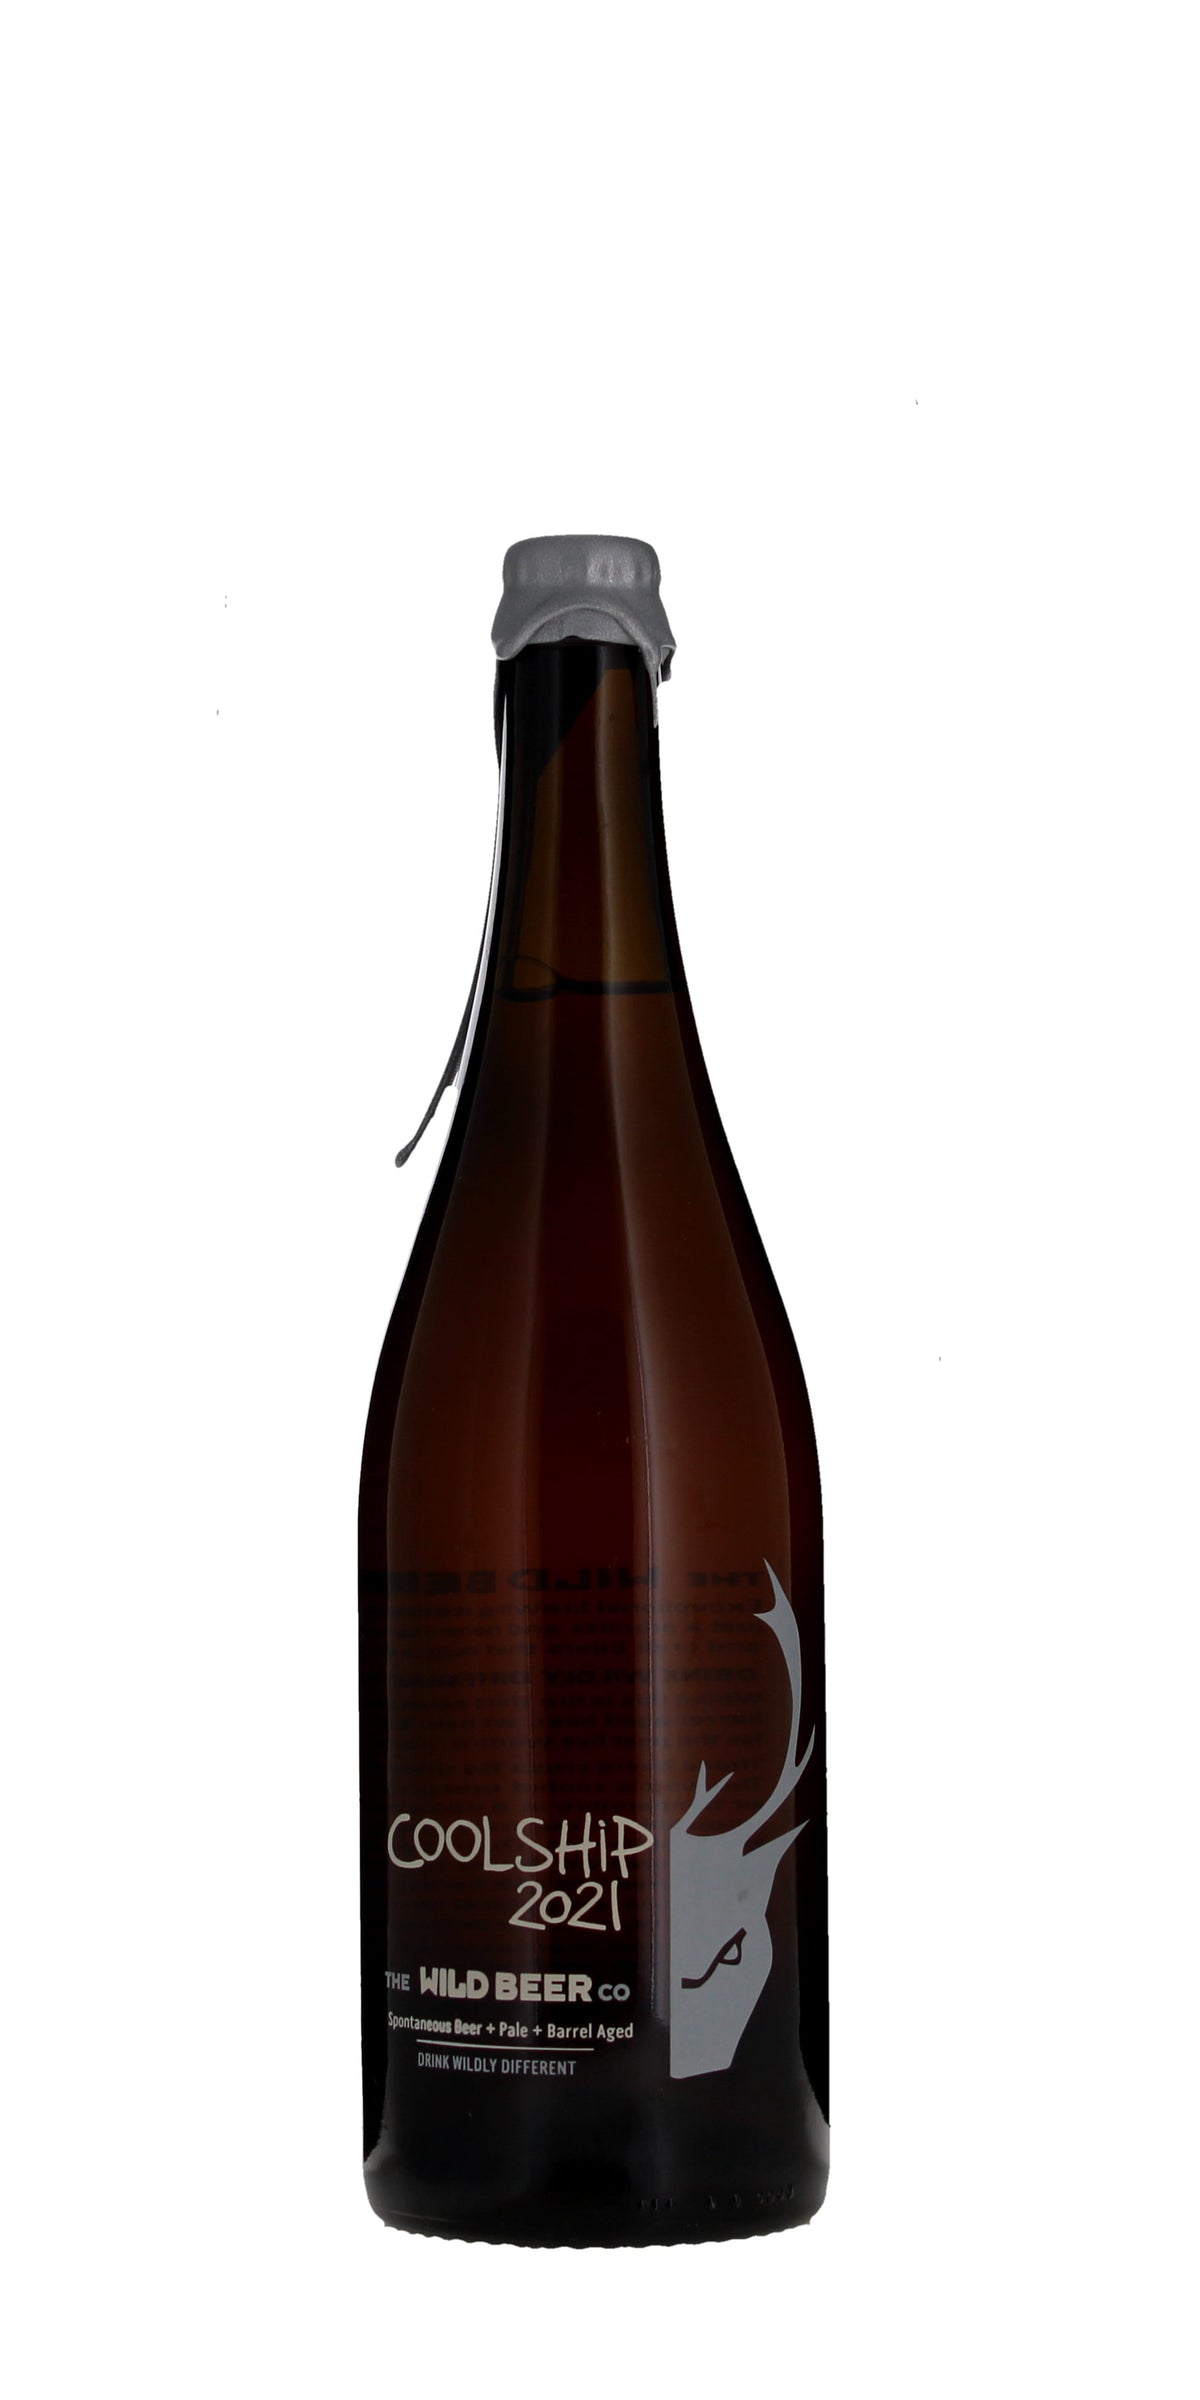 Wild Beer, Coolship 2021, 750ml Bottle, 5.9%